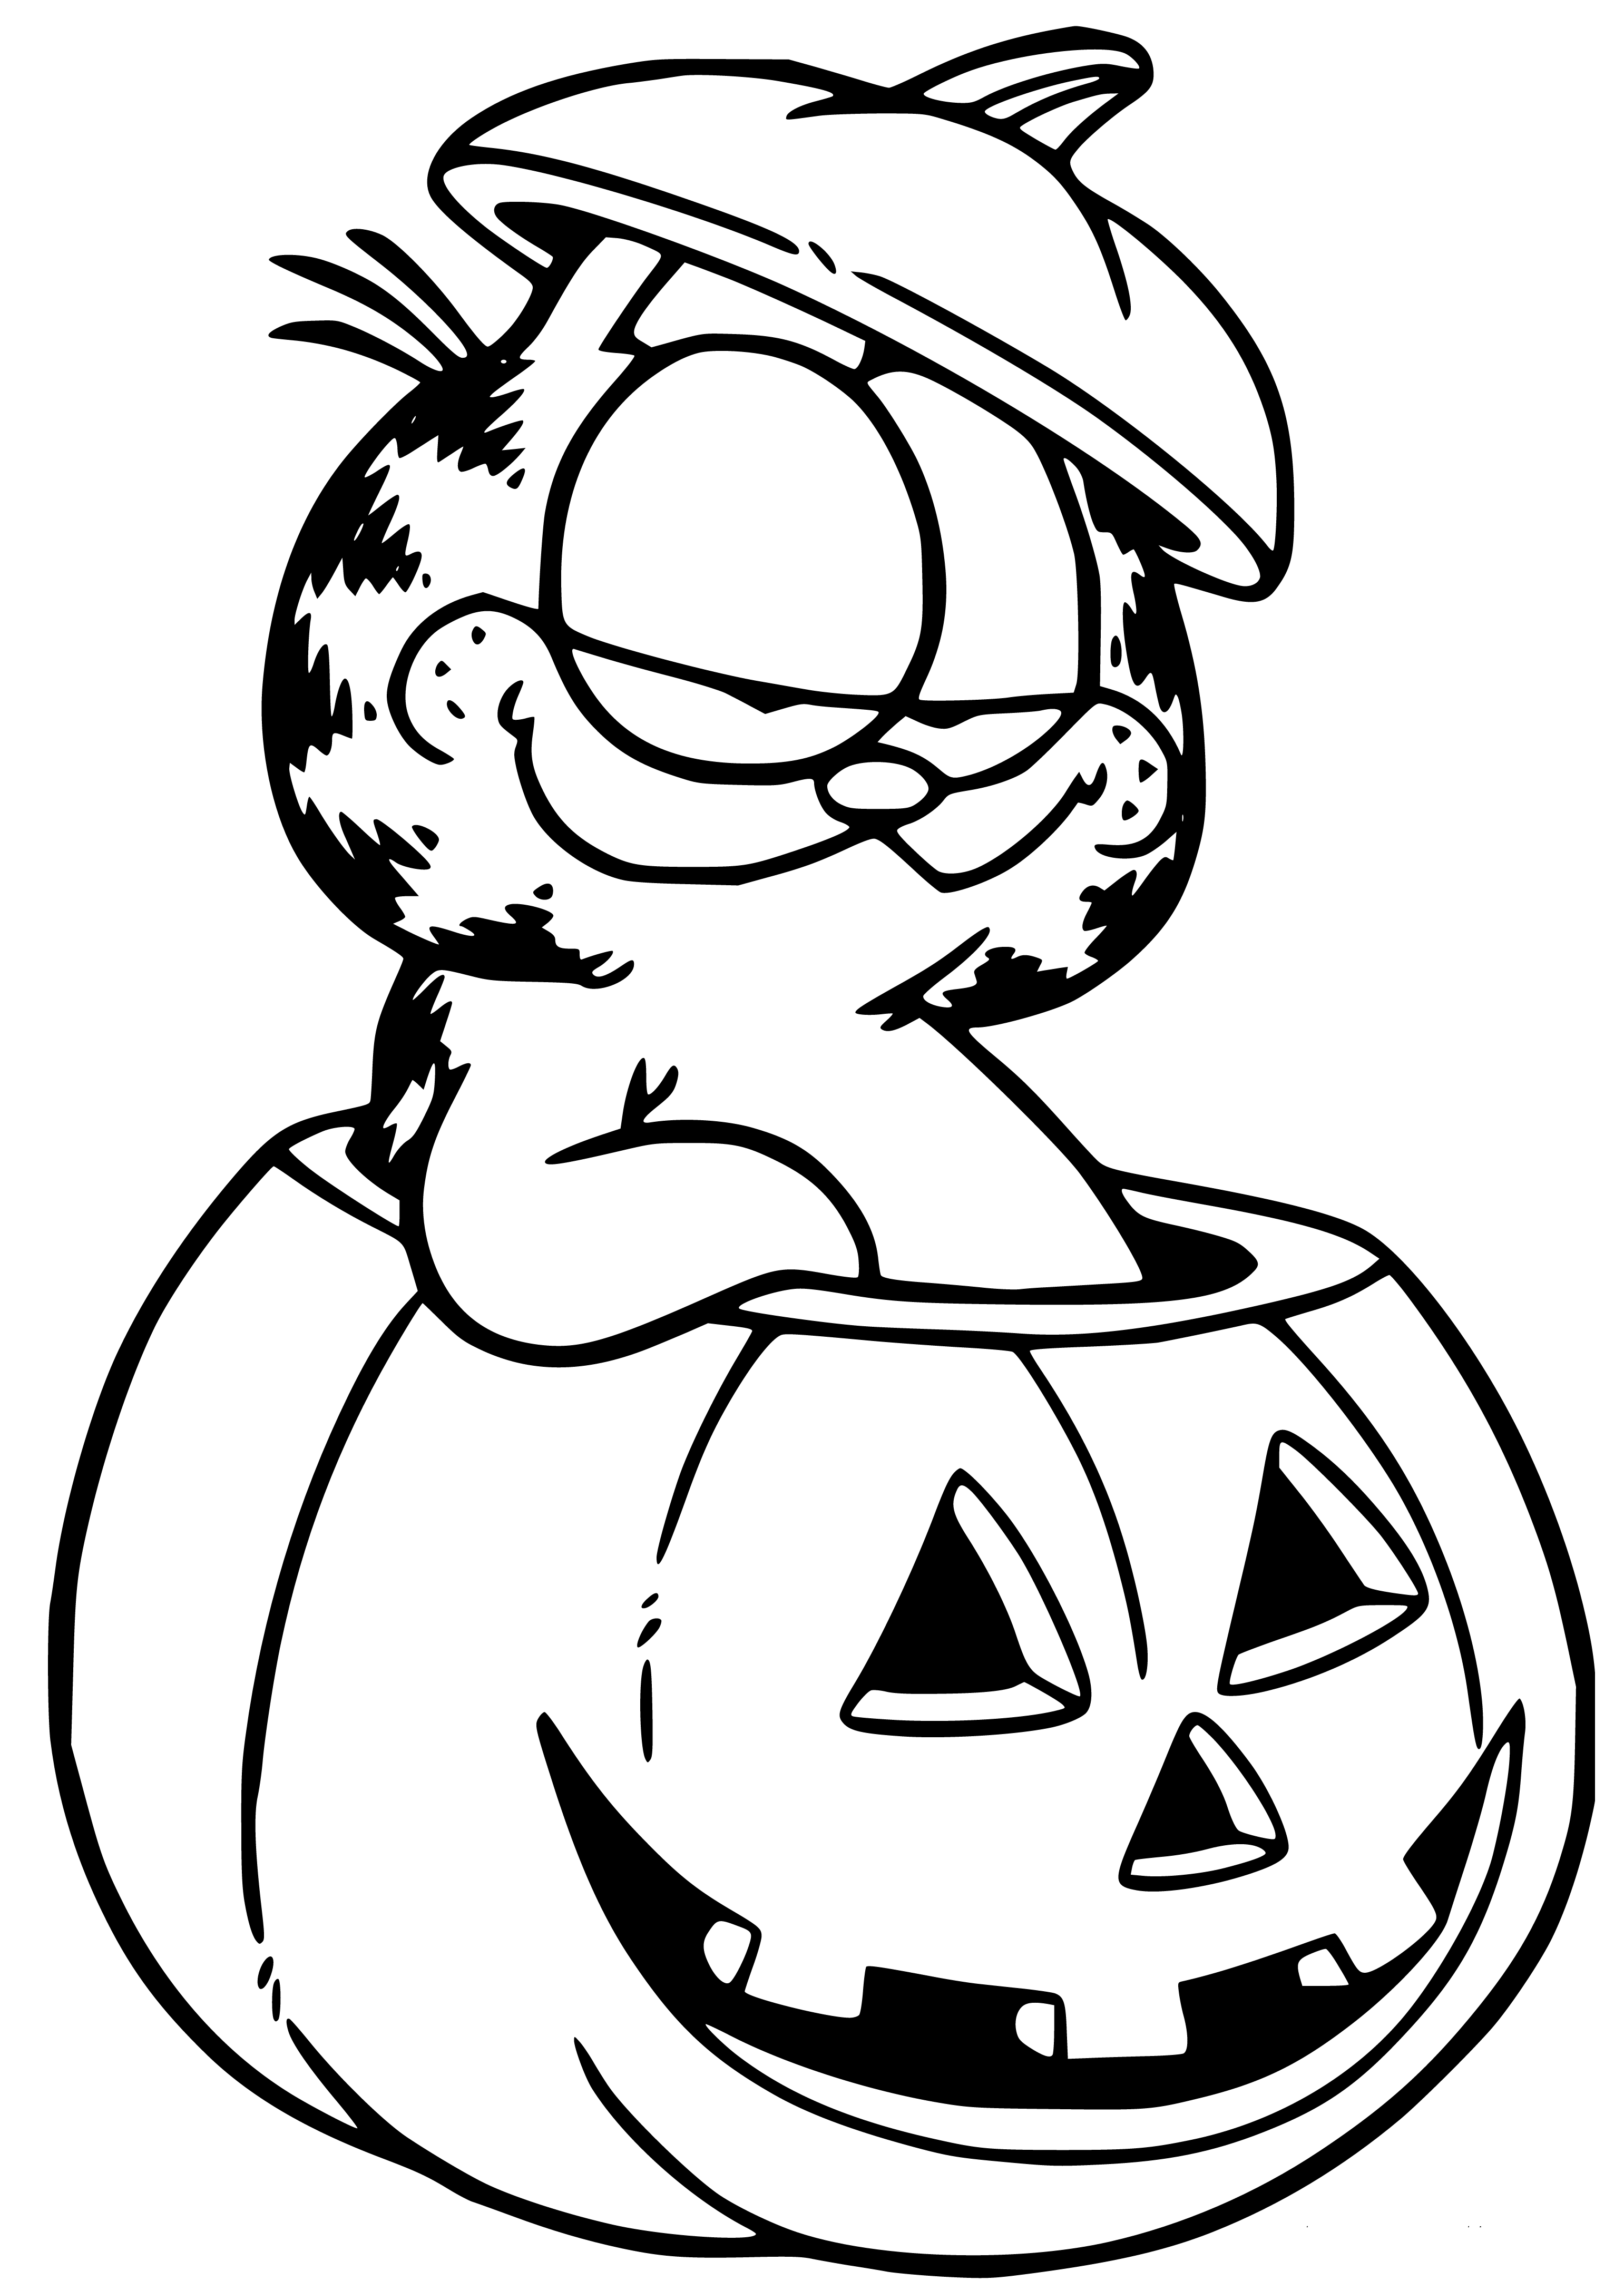 Printable Garfield Halloween Coloring Page for kids.